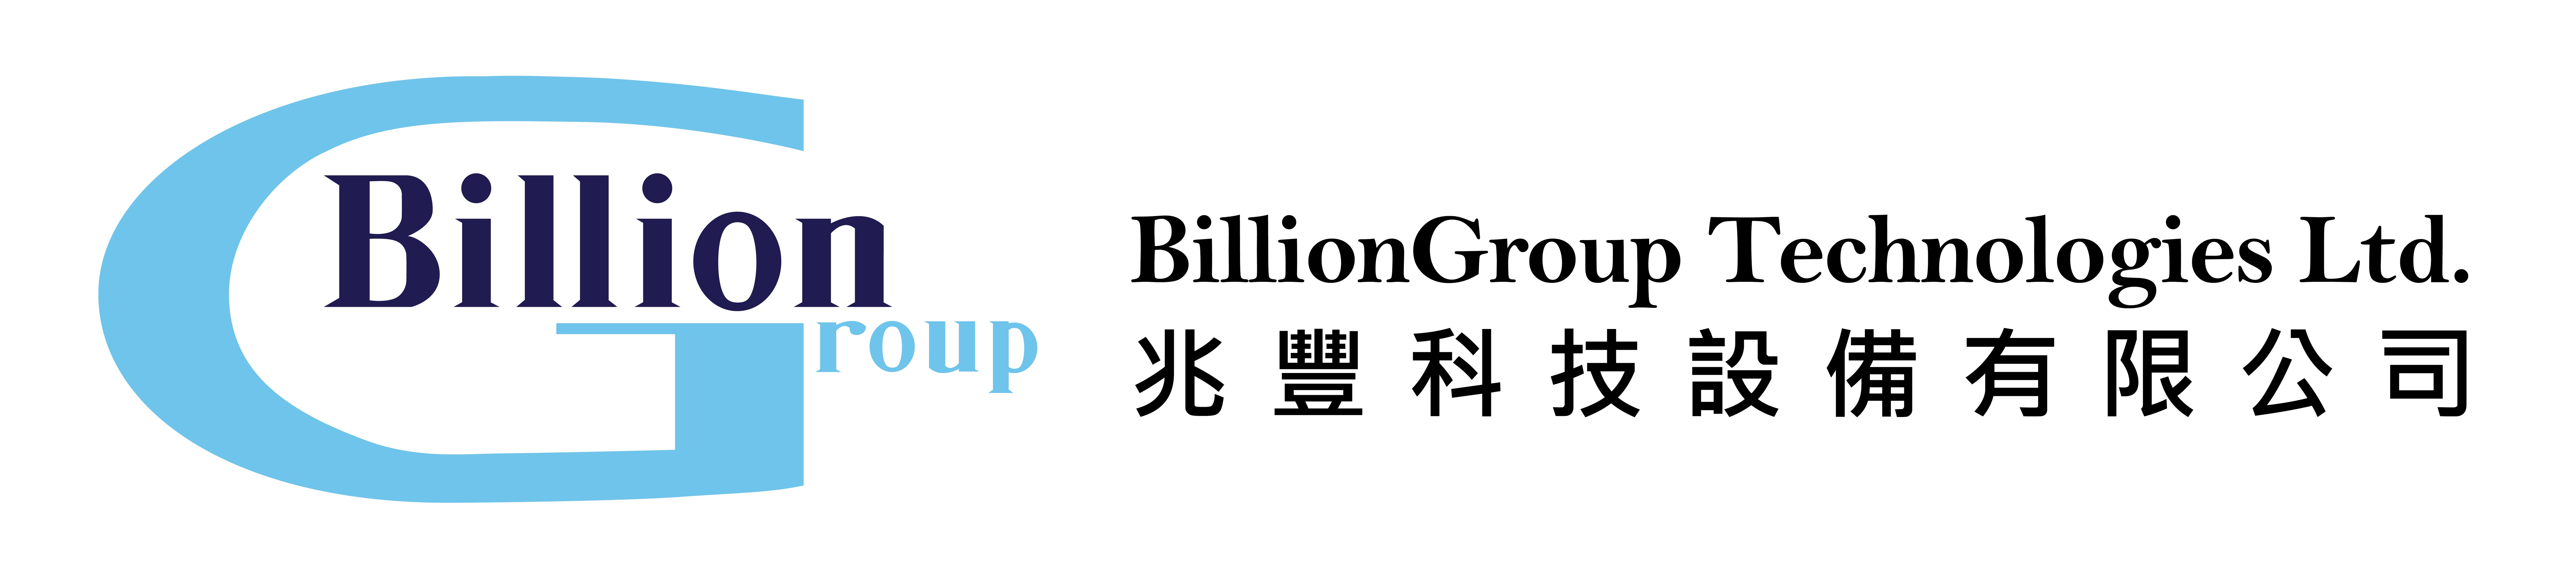 billiongroup